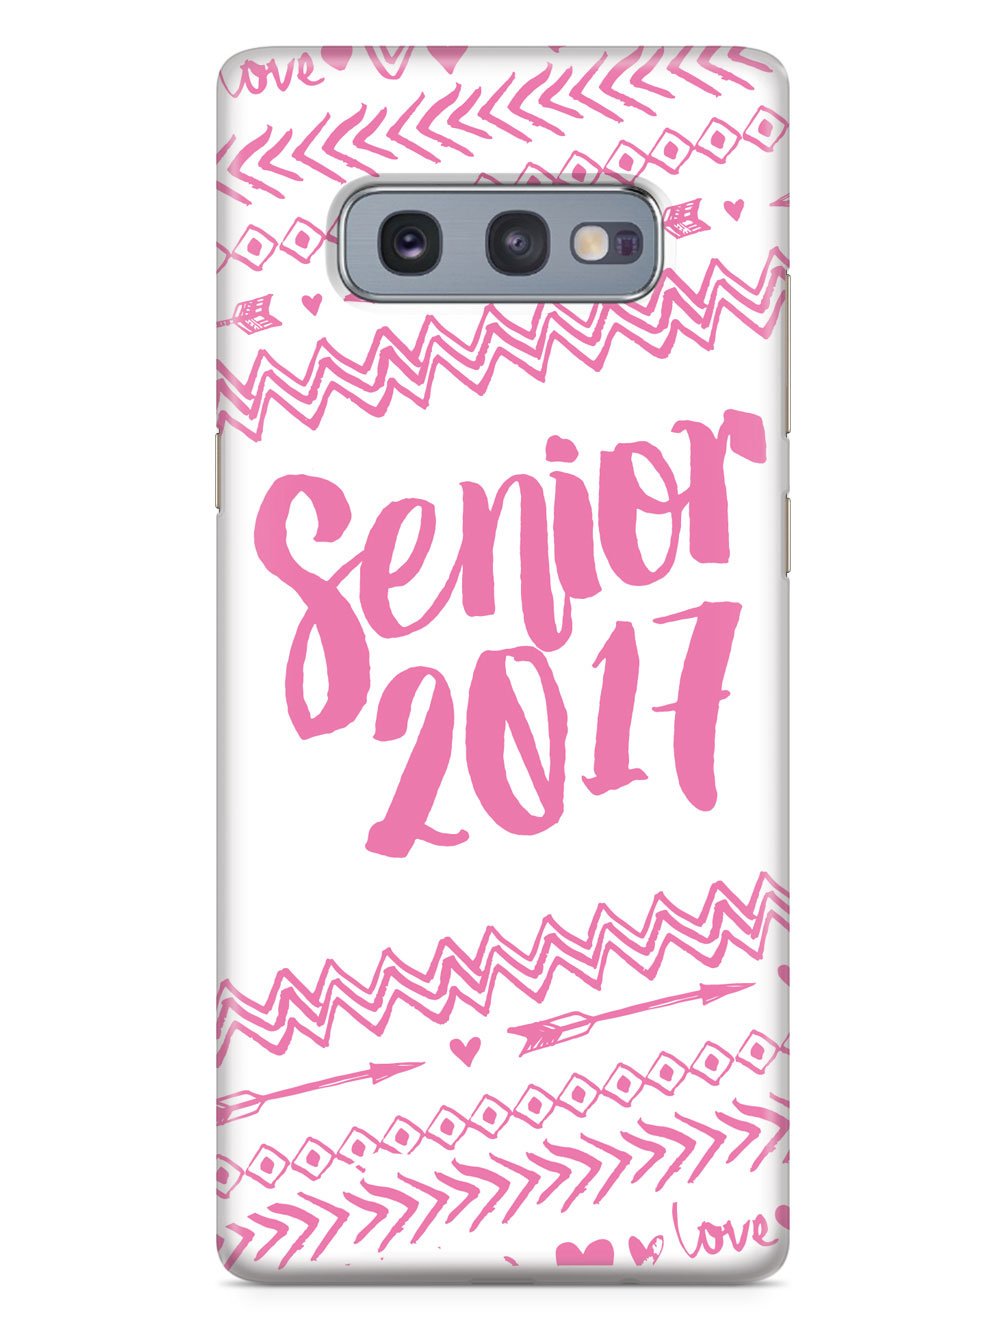 Senior 2017 - Pink Case - pipercleo.com